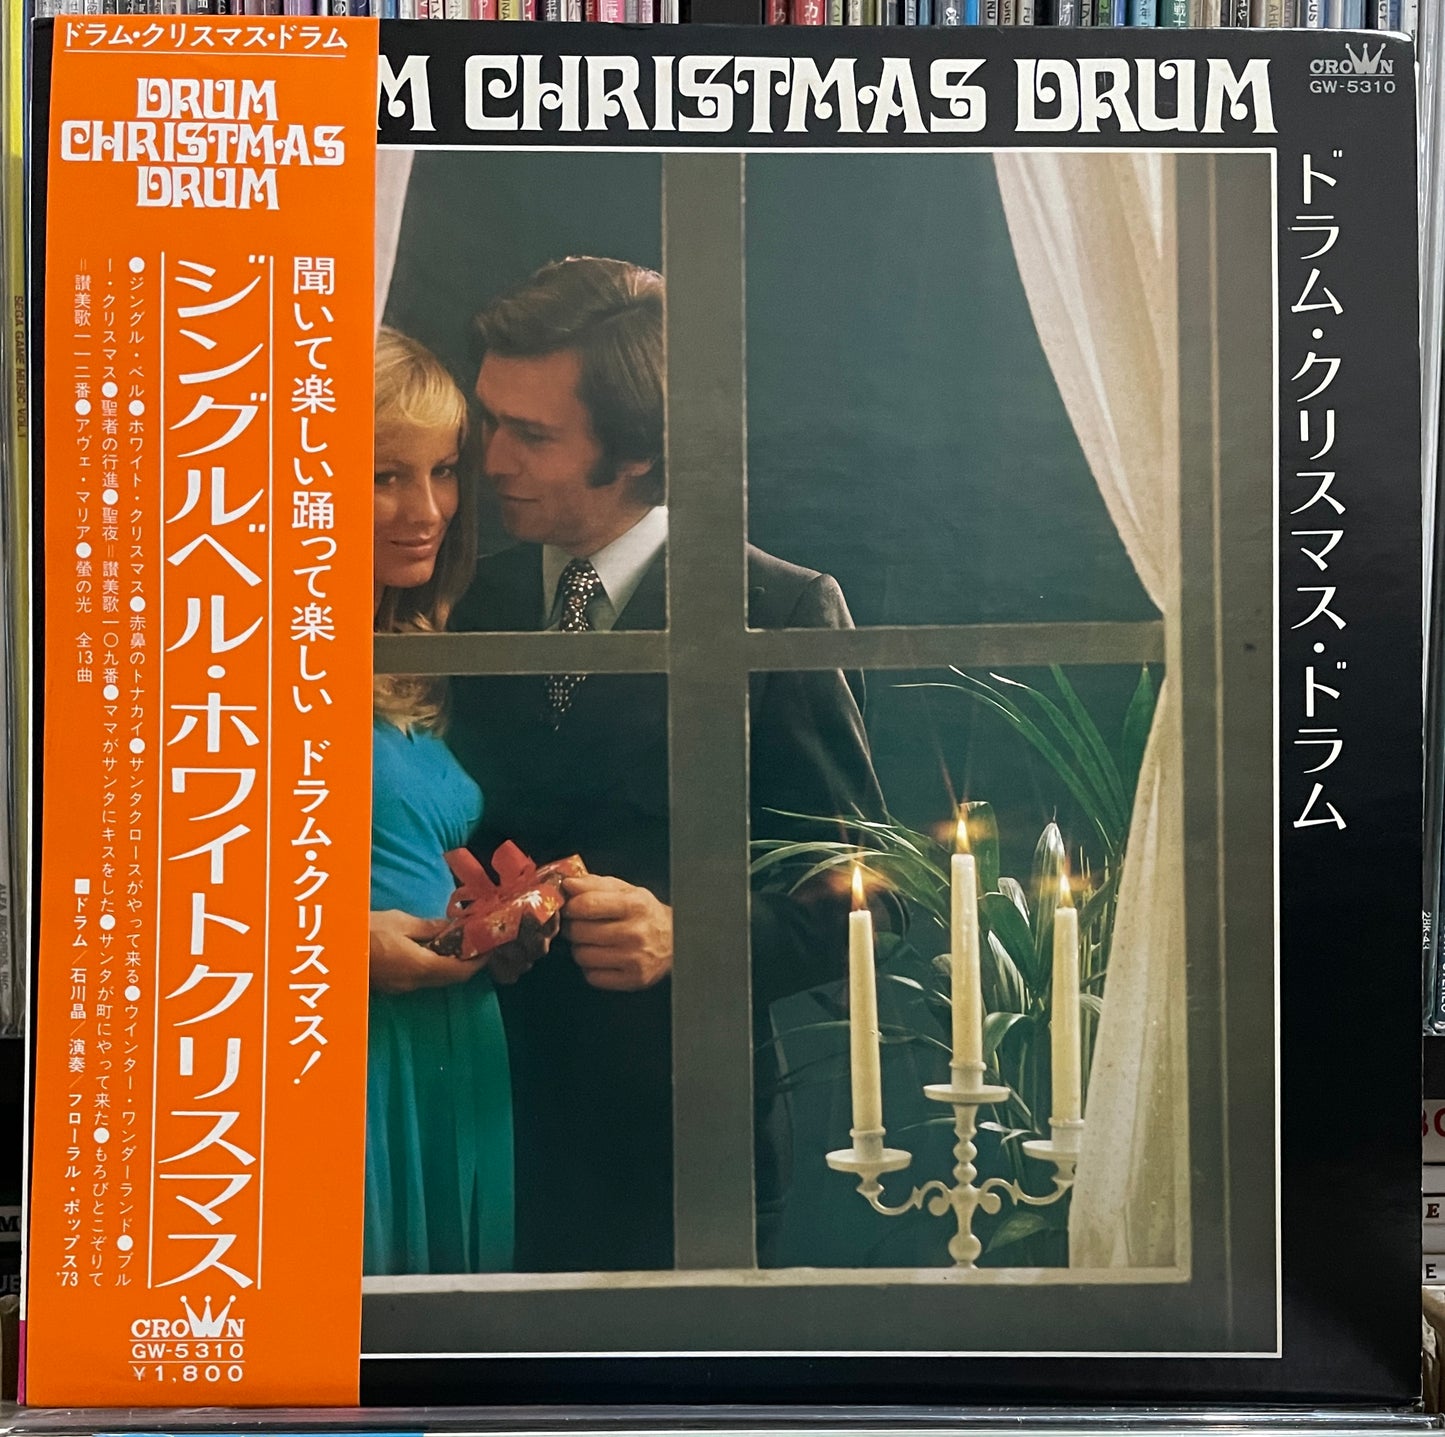 Akira Ishikawa & Floral Pops 70 “Drum Christmas Drum” (1974)